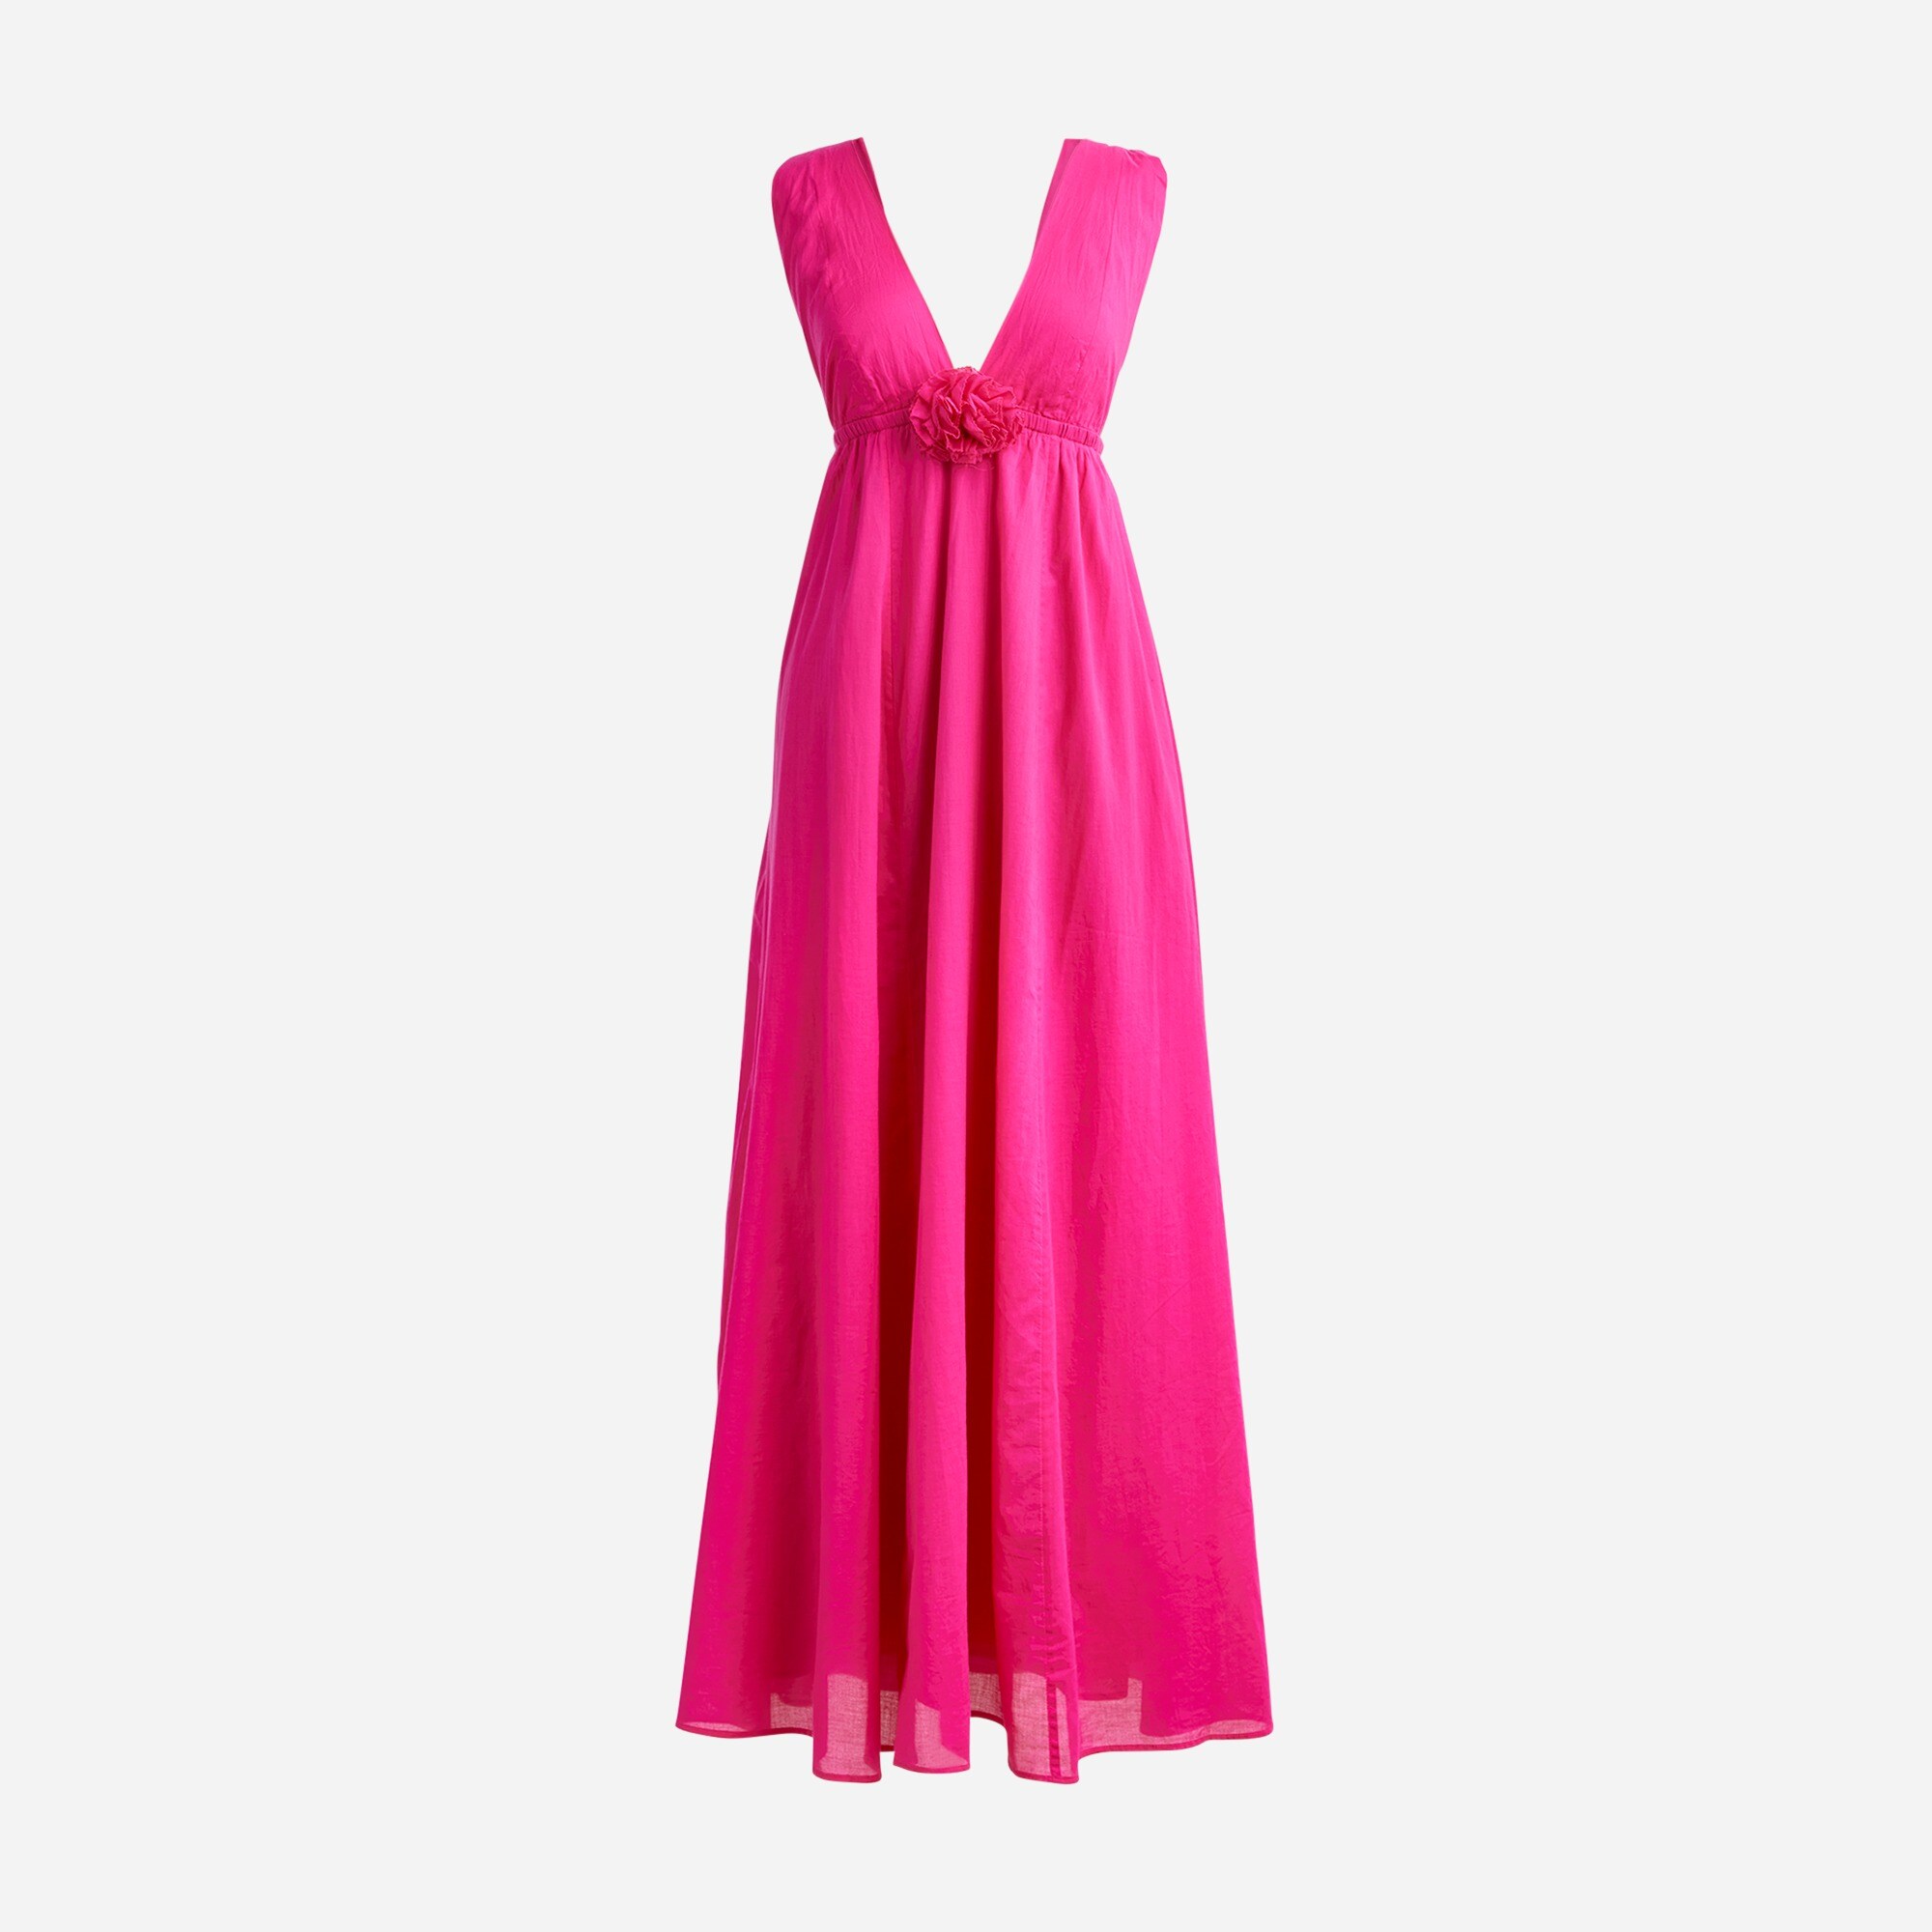  Rosette plunge dress in cotton voile